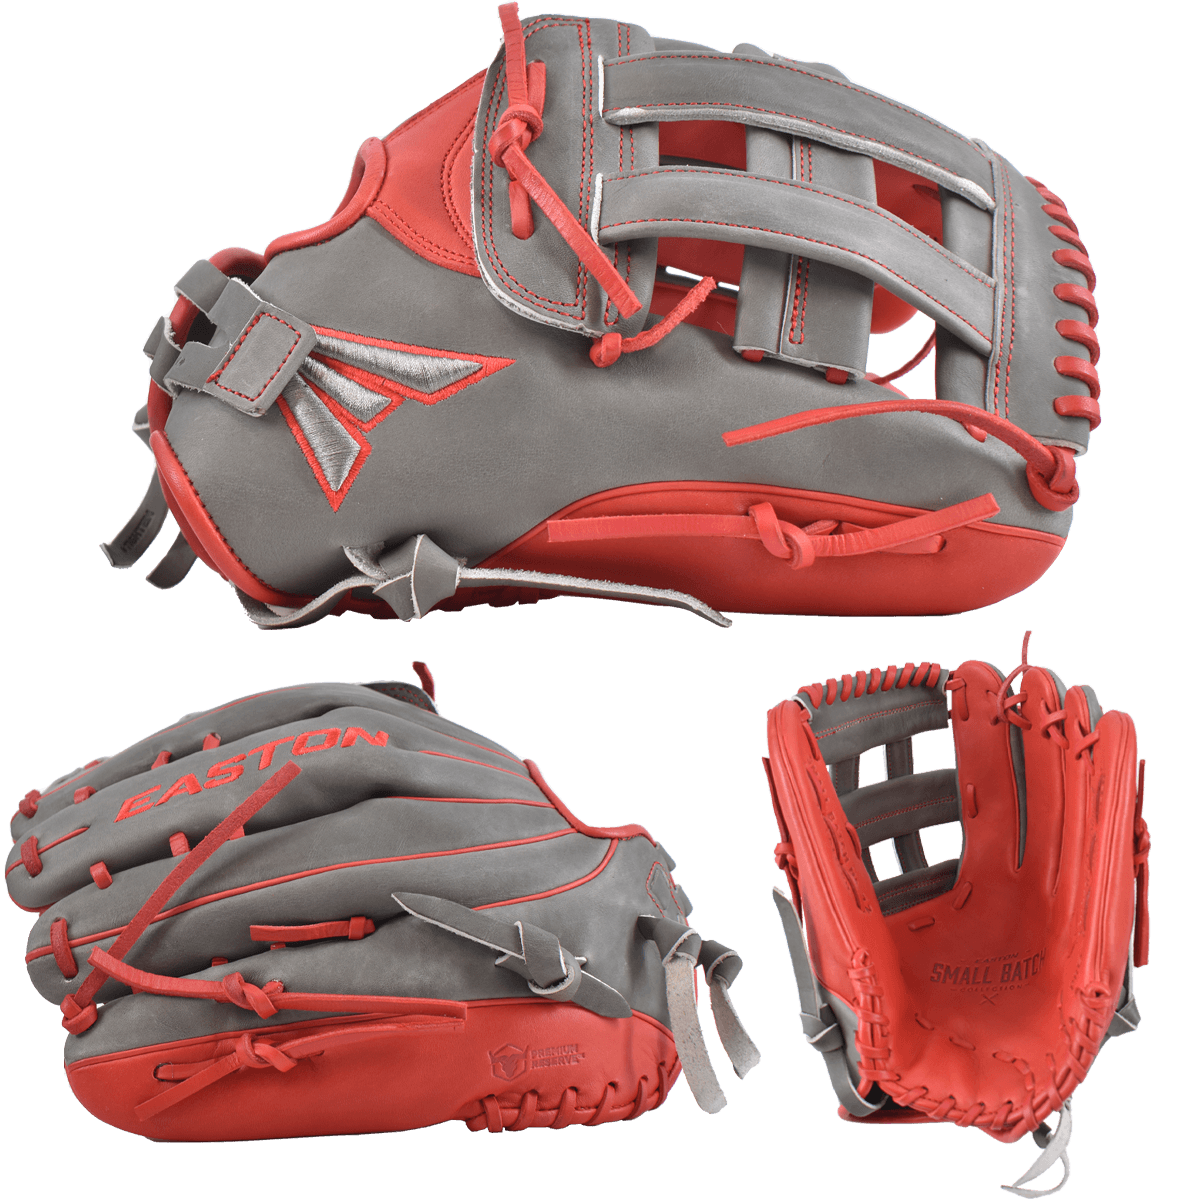 2022 Easton Small Batch No. 72 Slowpitch Softball Glove - Grey/Red - Smash It Sports